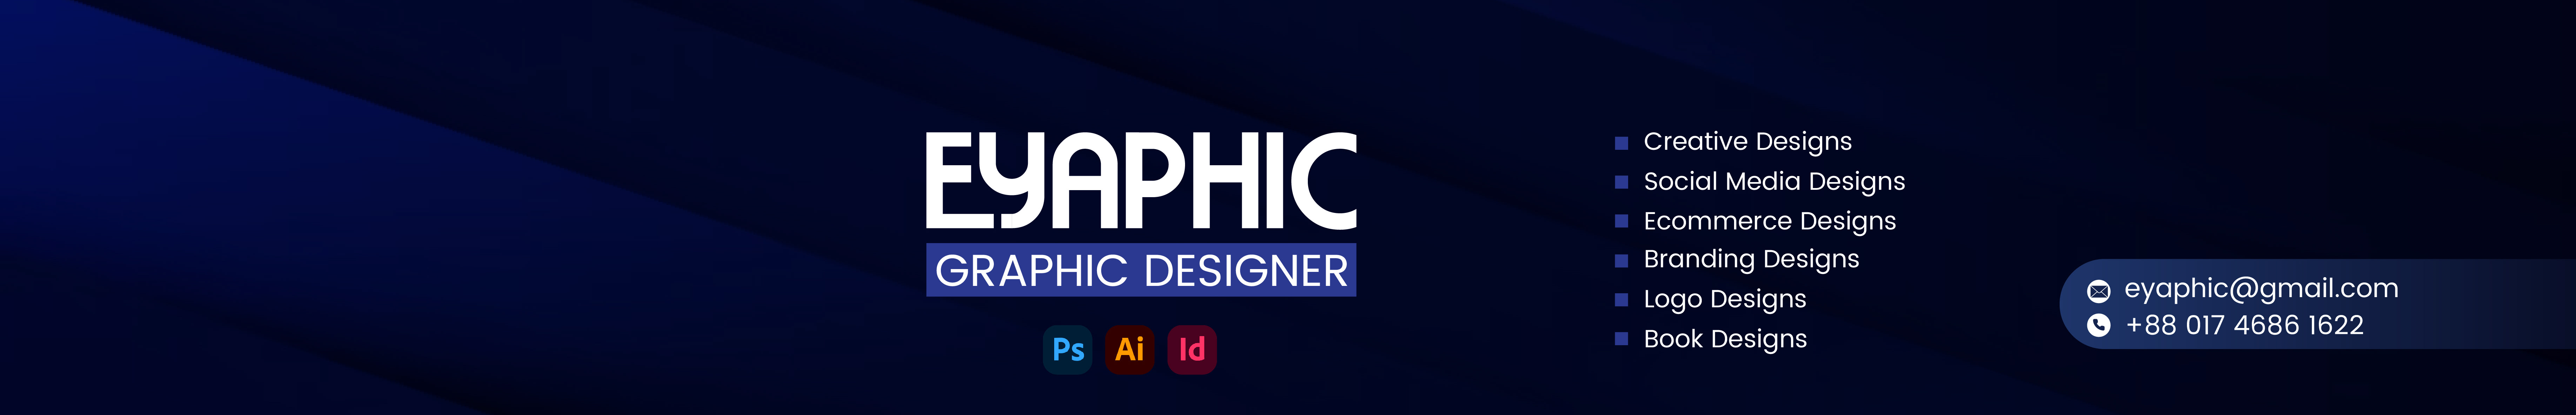 Profielbanner van Eyaphic (Graphic Designer)